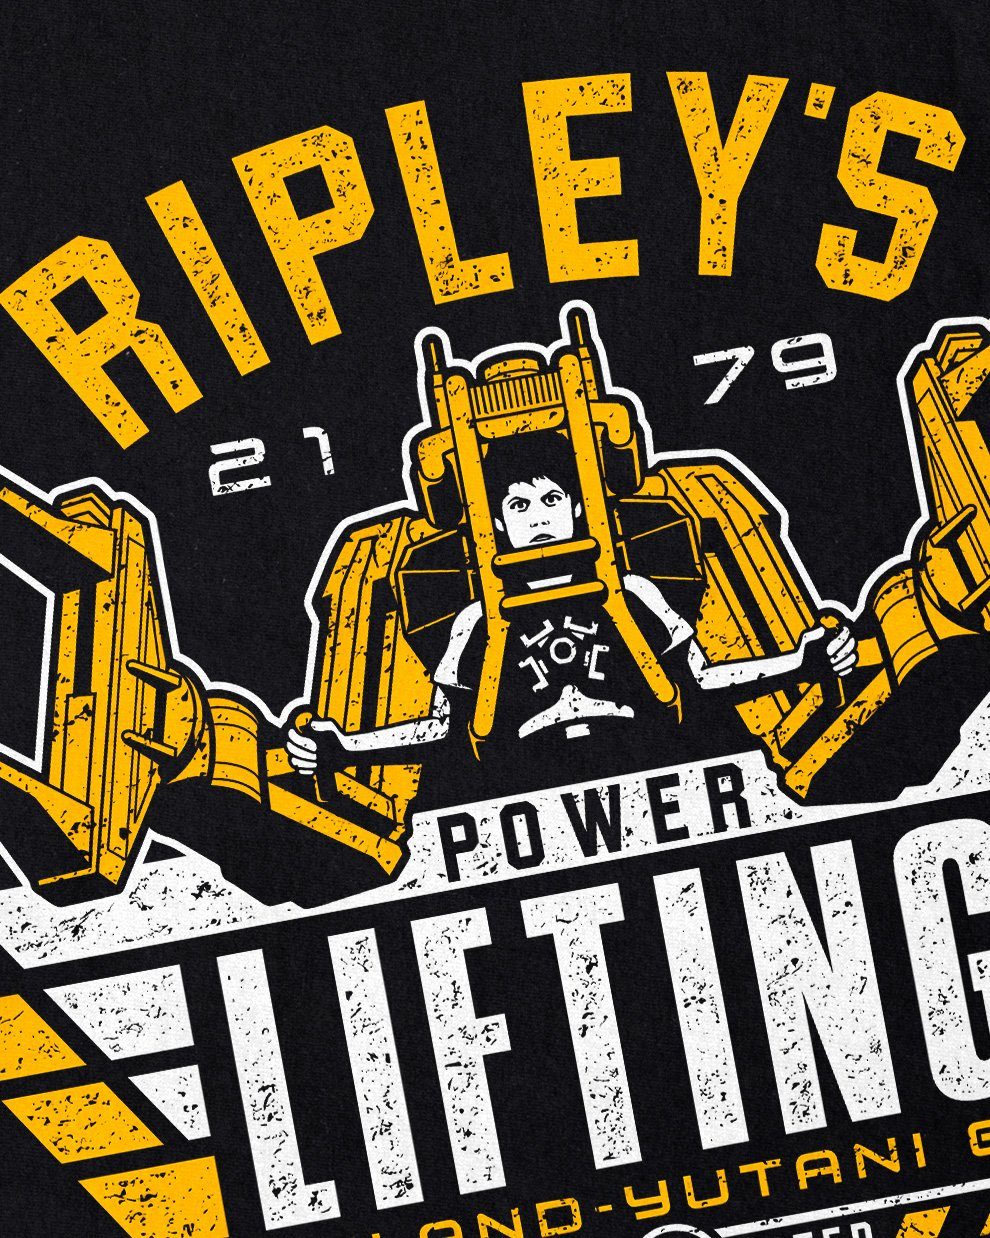 Gym Print-Shirt predator alien Ripleys T-Shirt ridley style3 Kinder xenomorph scott